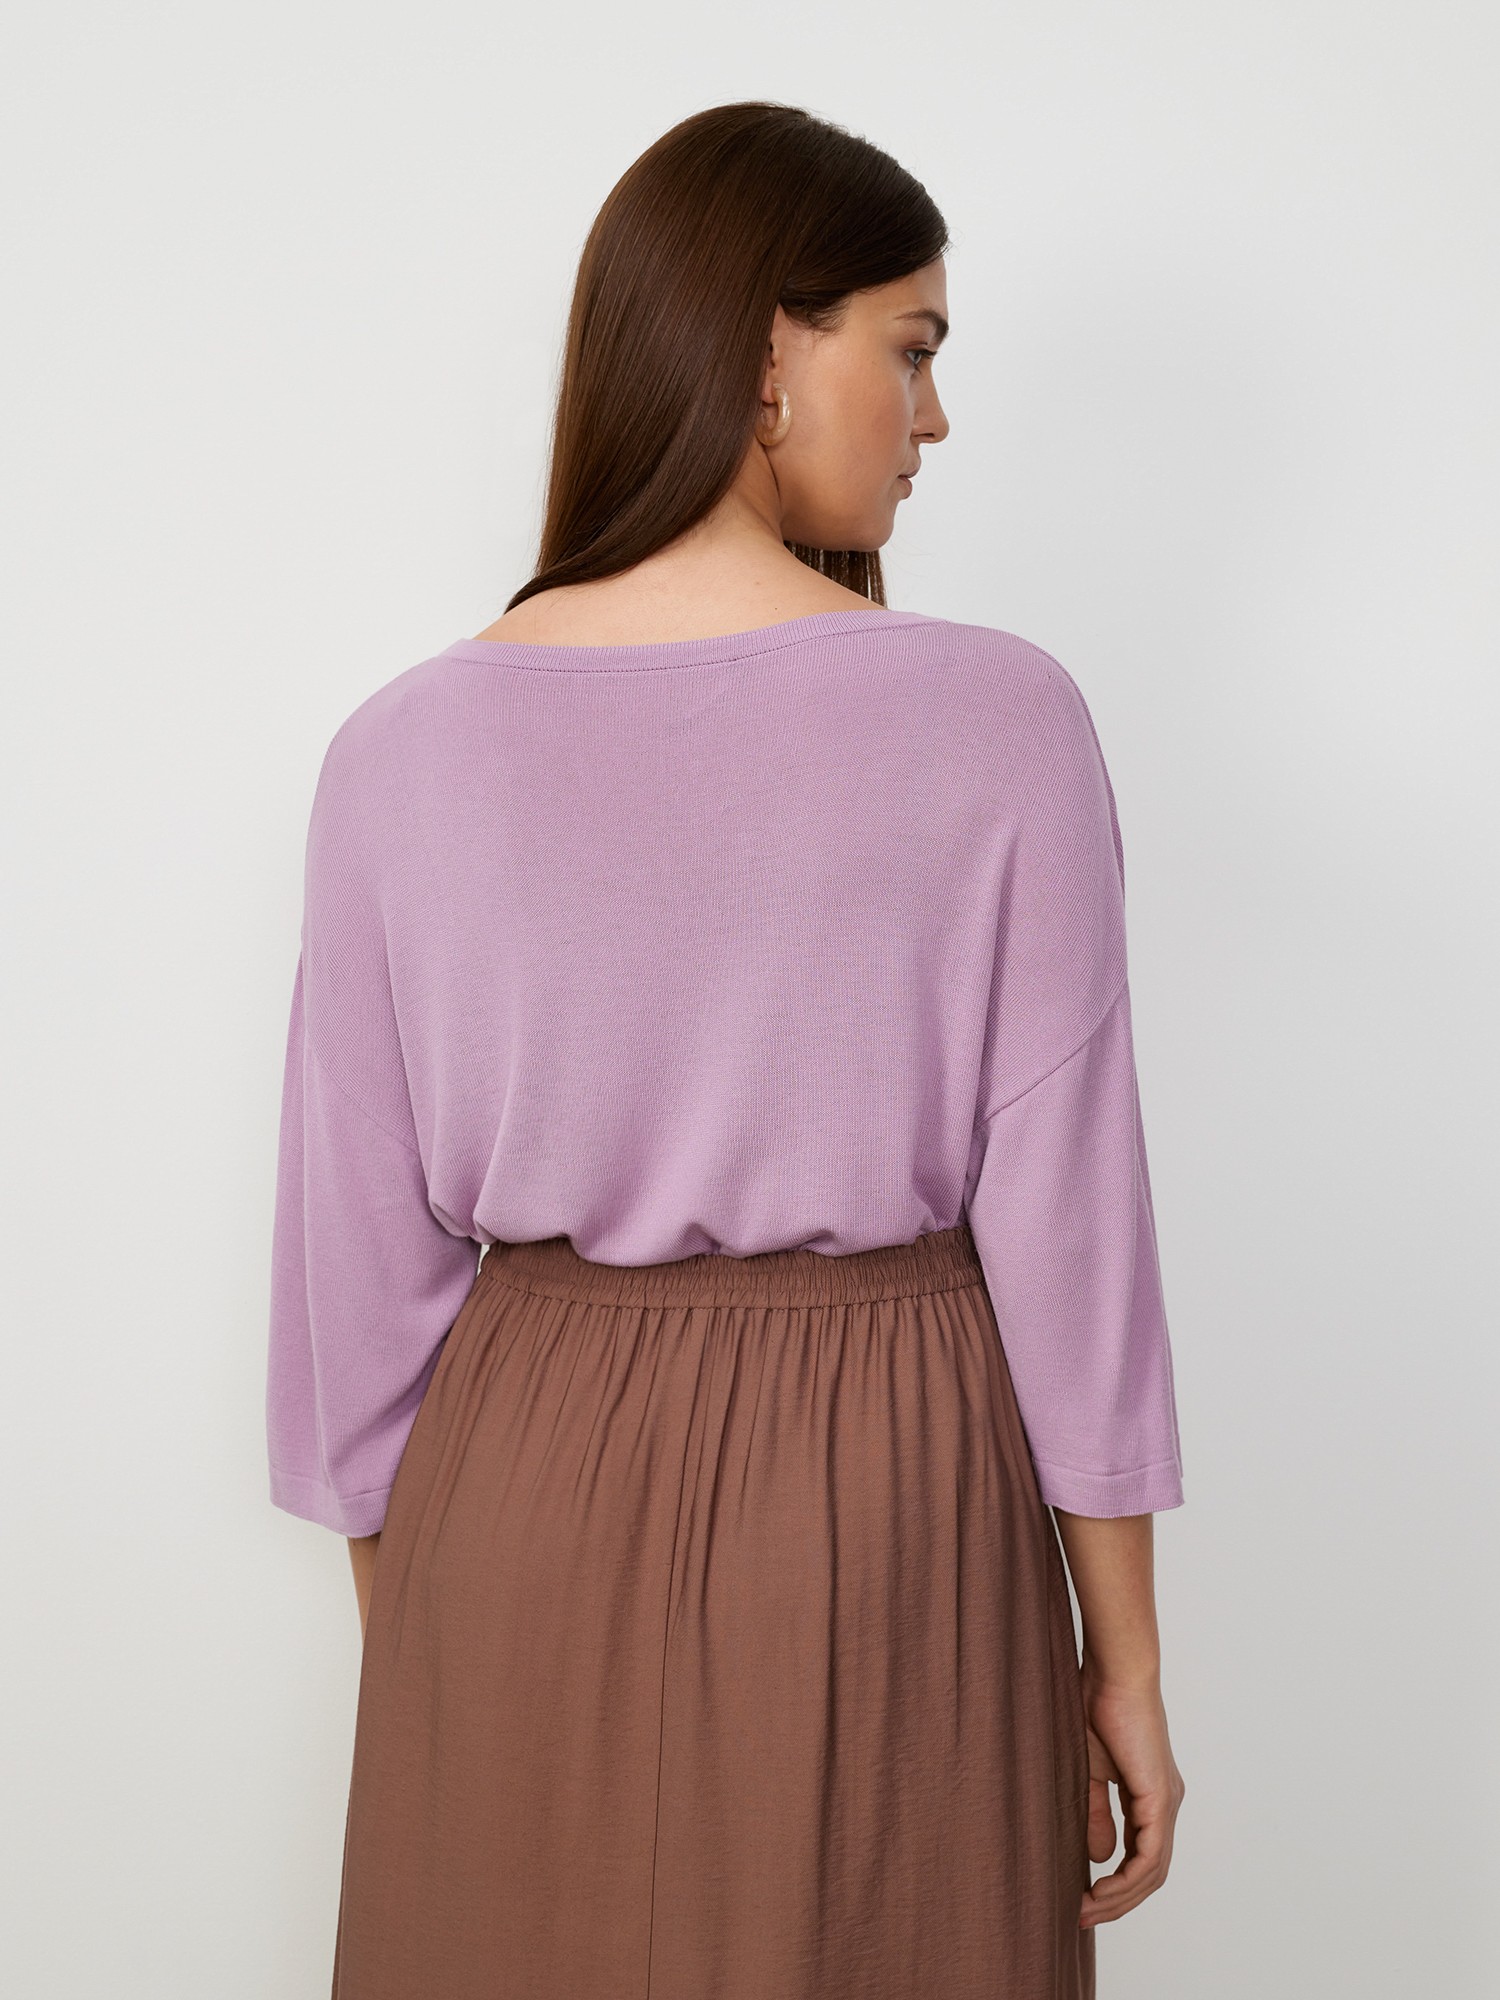 Блуза вязаная с монилью Lalis BL1069V, цвет фиолетовый, размер 50 - фото 4